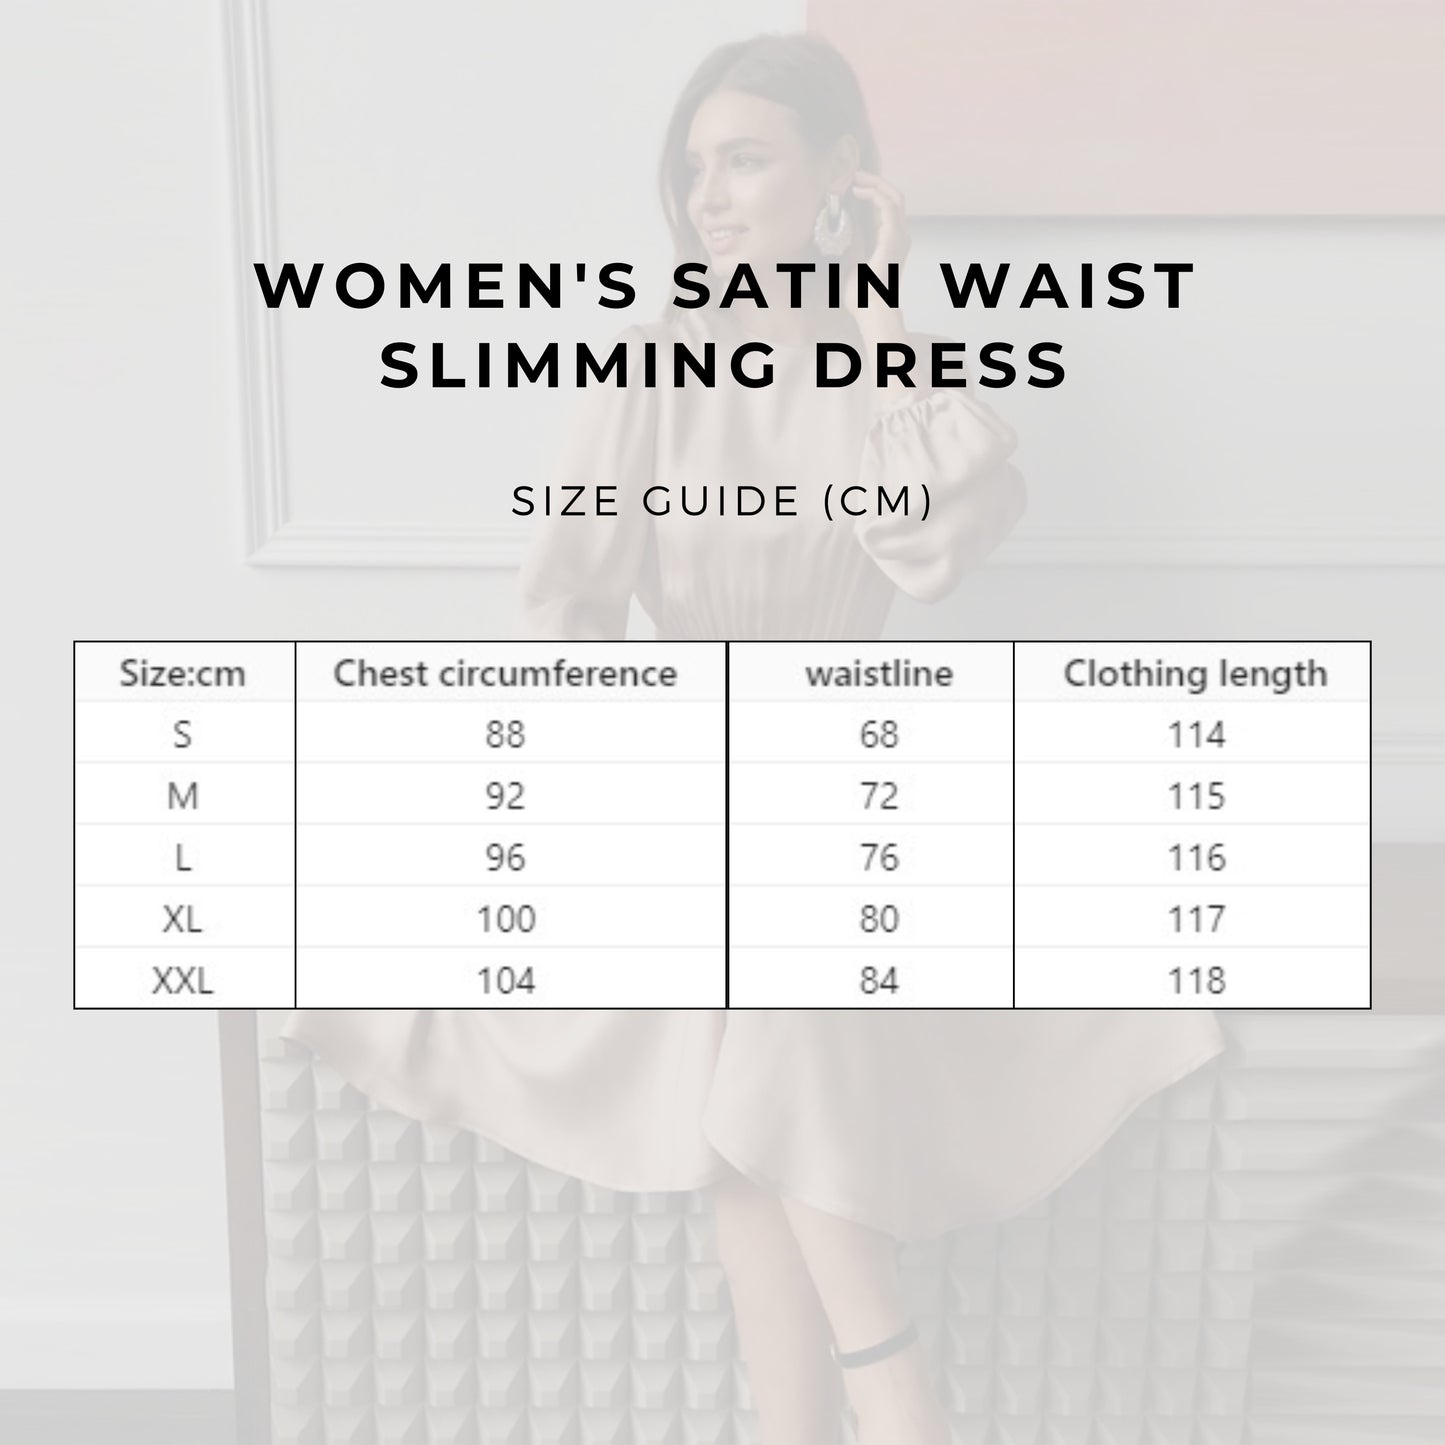 Women's Satin Waist Slimming Dress